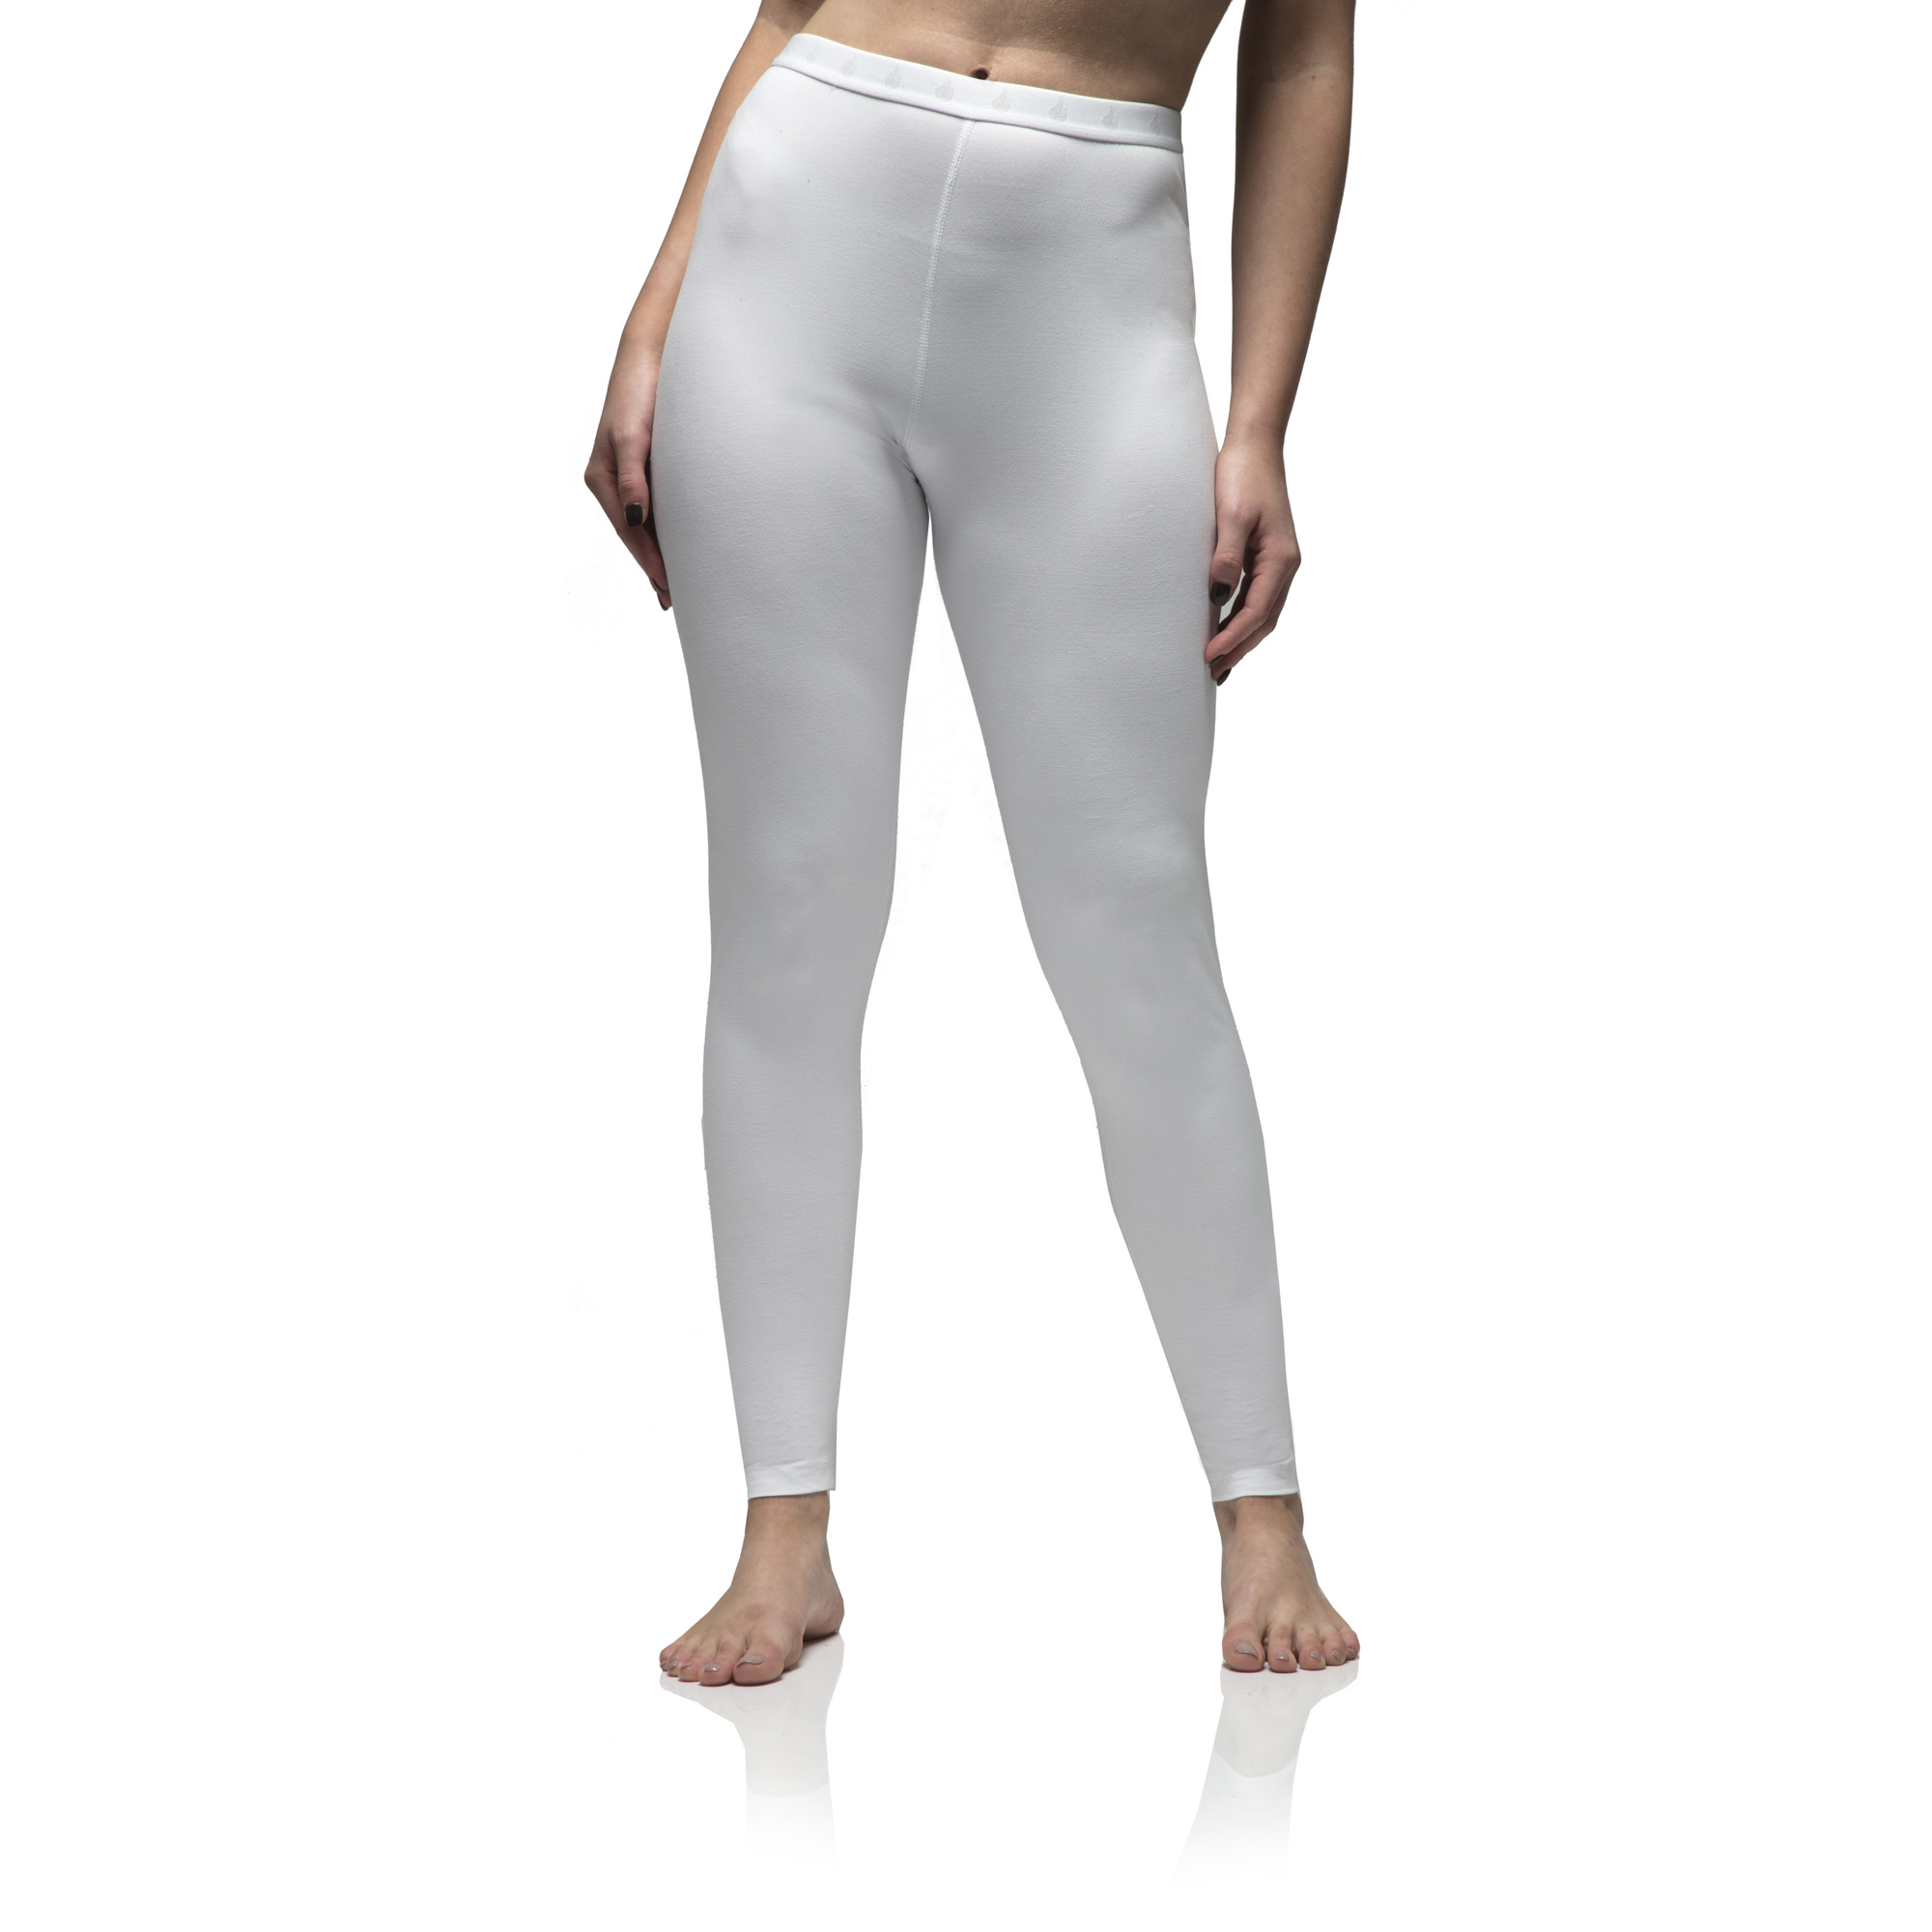 Heat Holders, Women's Original Maria Thrmal Pants WinterWhite XL, Waist  31.5 in, Inseam 30 in, Model# 886590055879